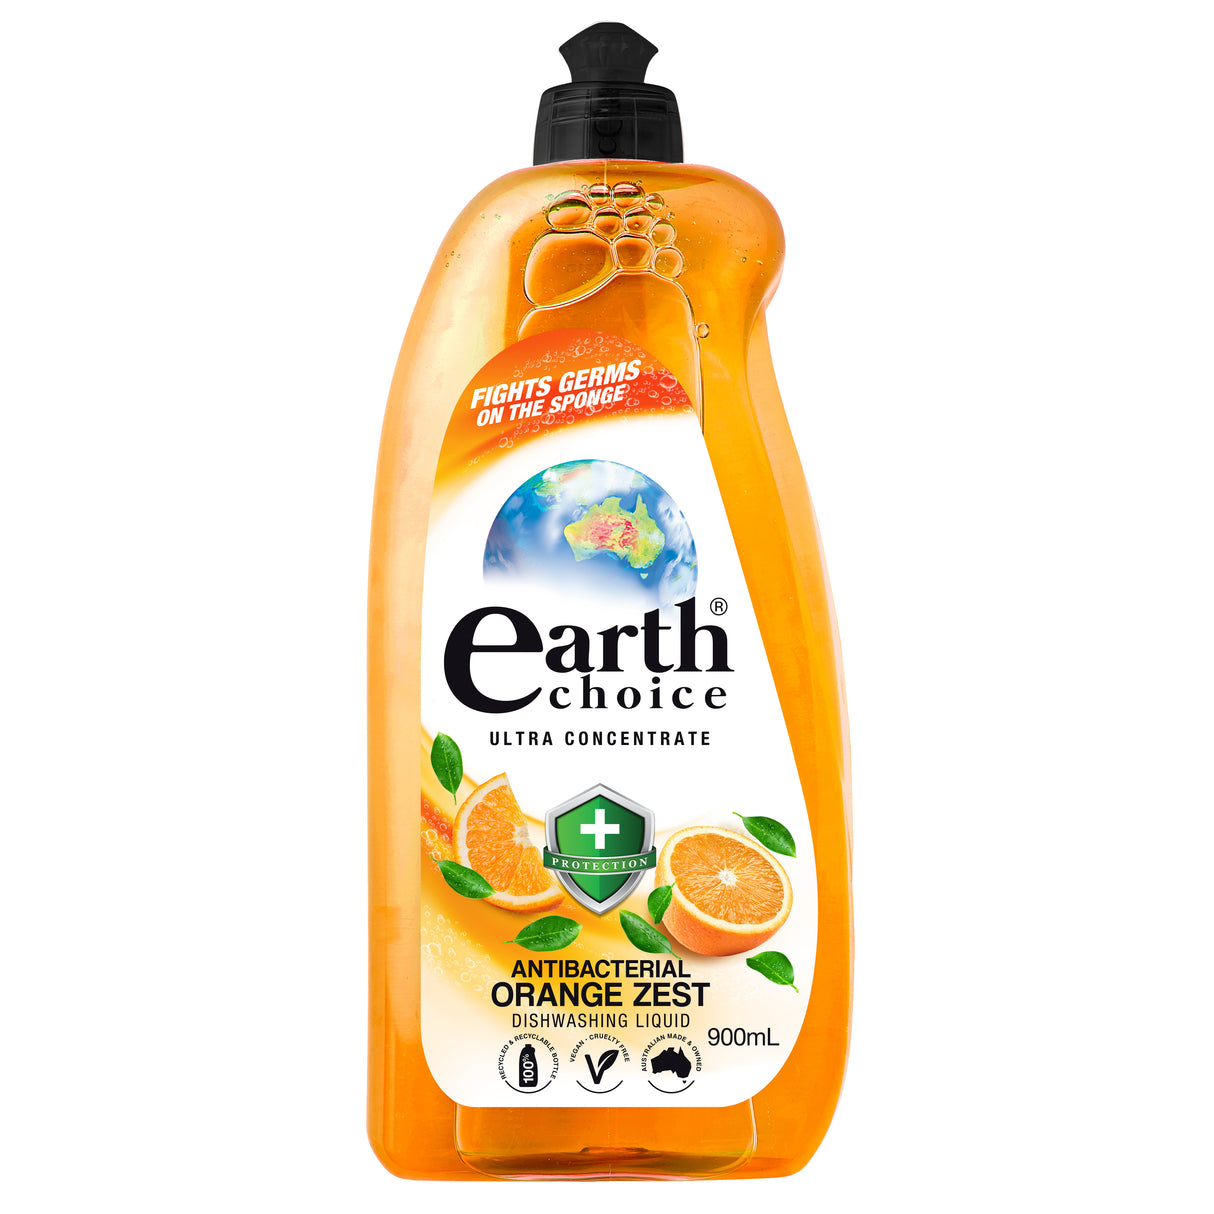 Earth Choice Antibacterial Orange Zest Concentrate Dishwashing Liquid 900ml